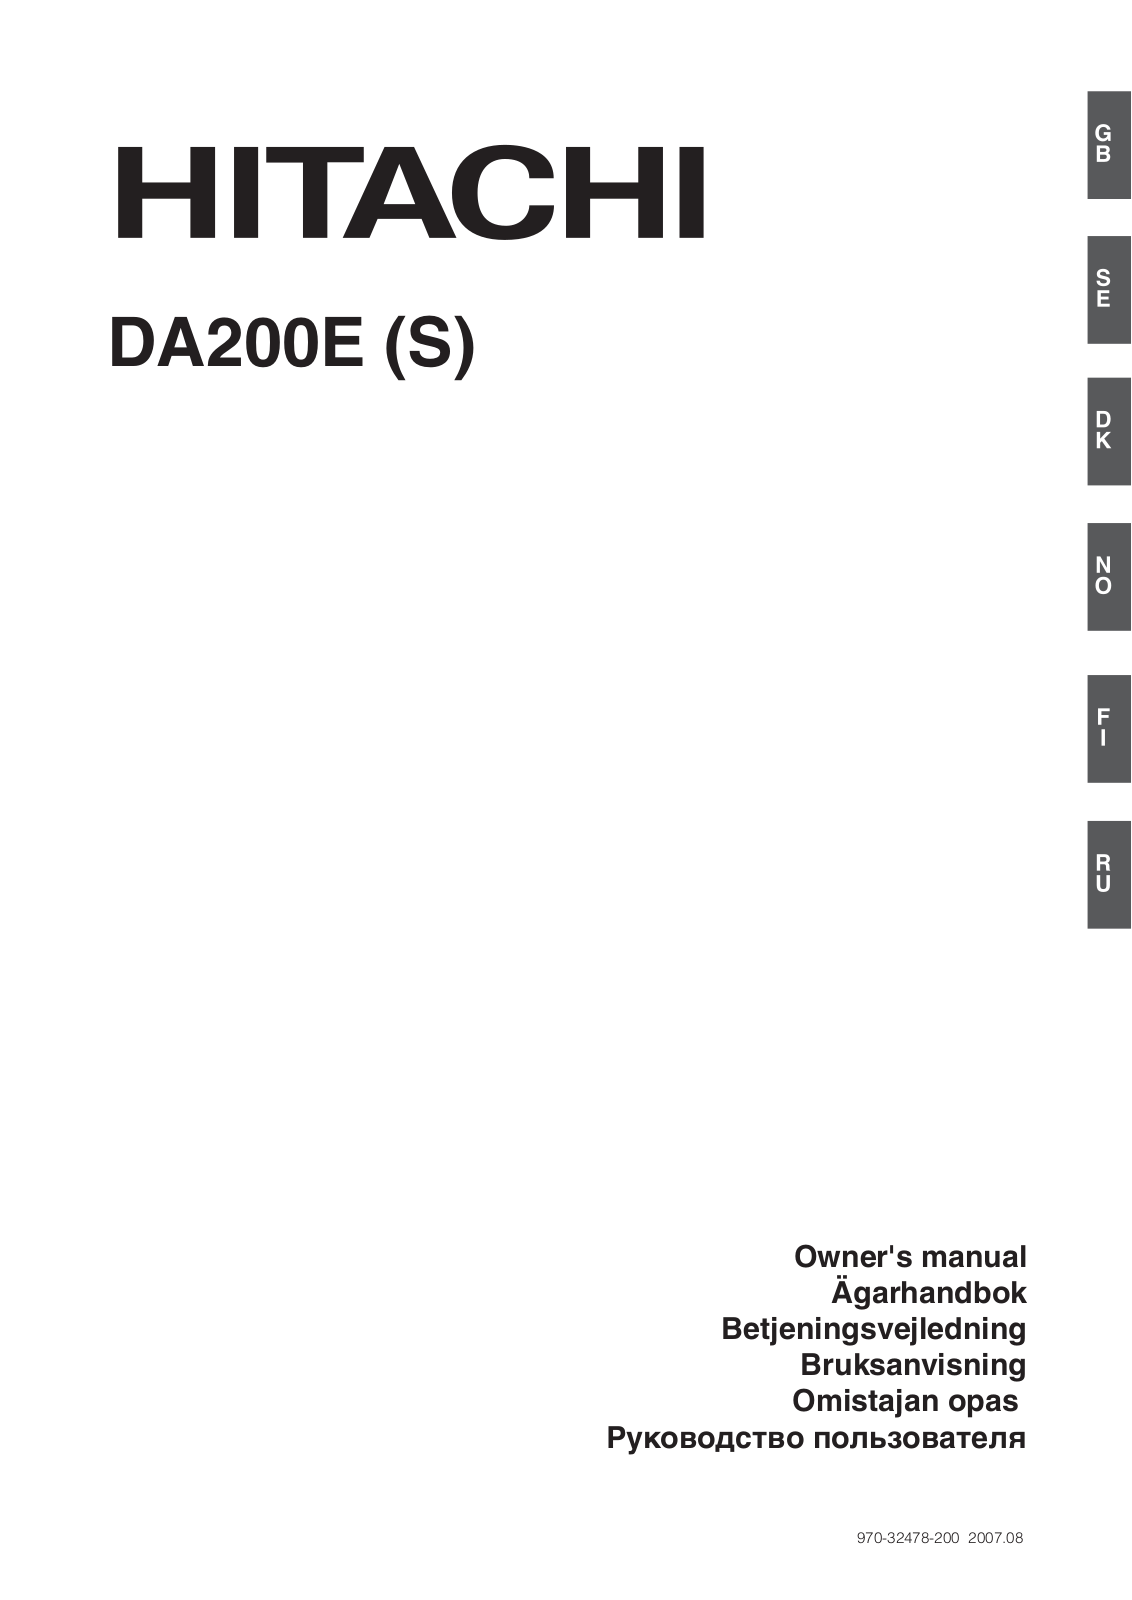 HITACHI DA200E User Manual